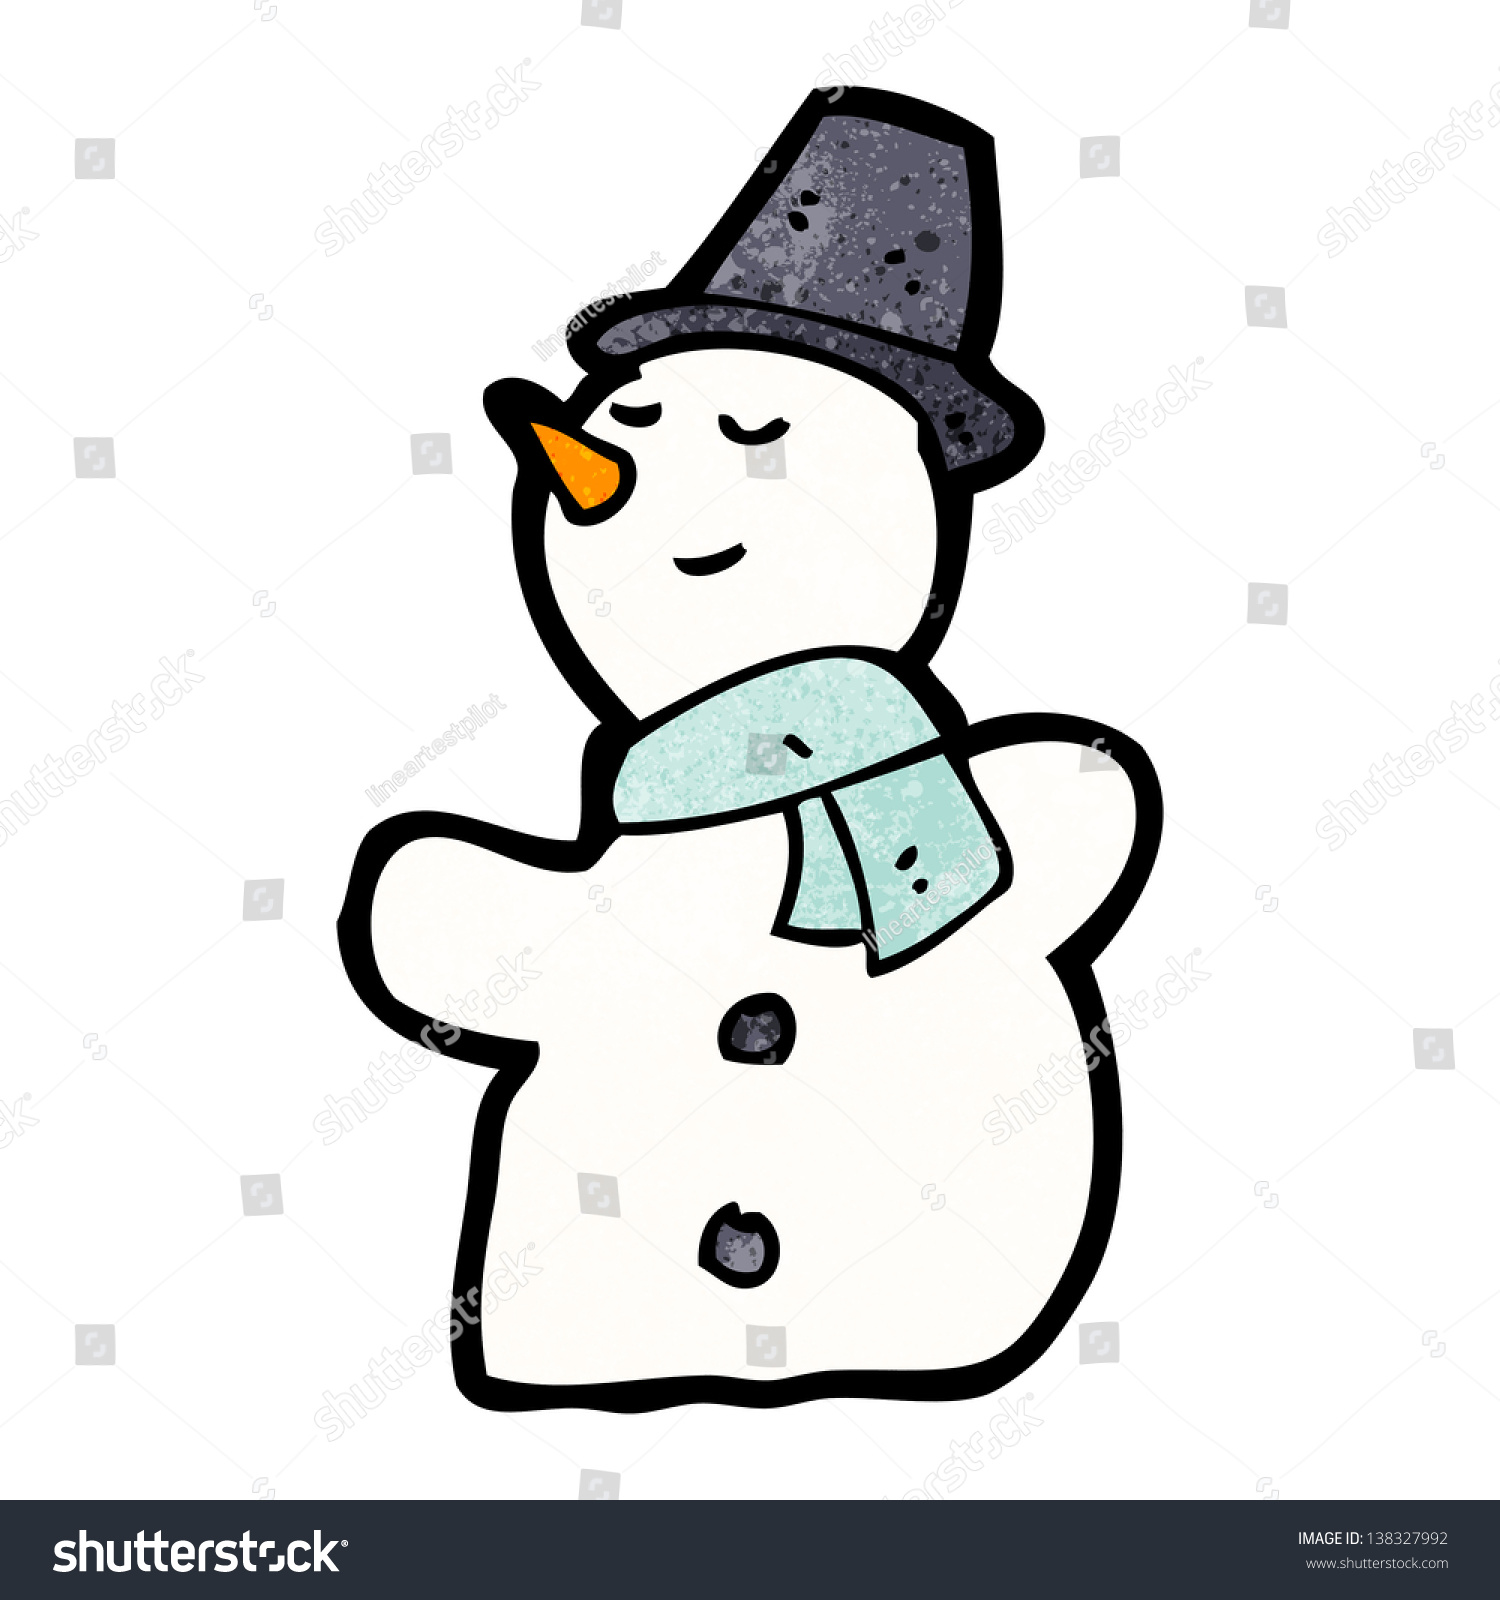 Cartoon Snowman Stock Photo 138327992 : Shutterstock